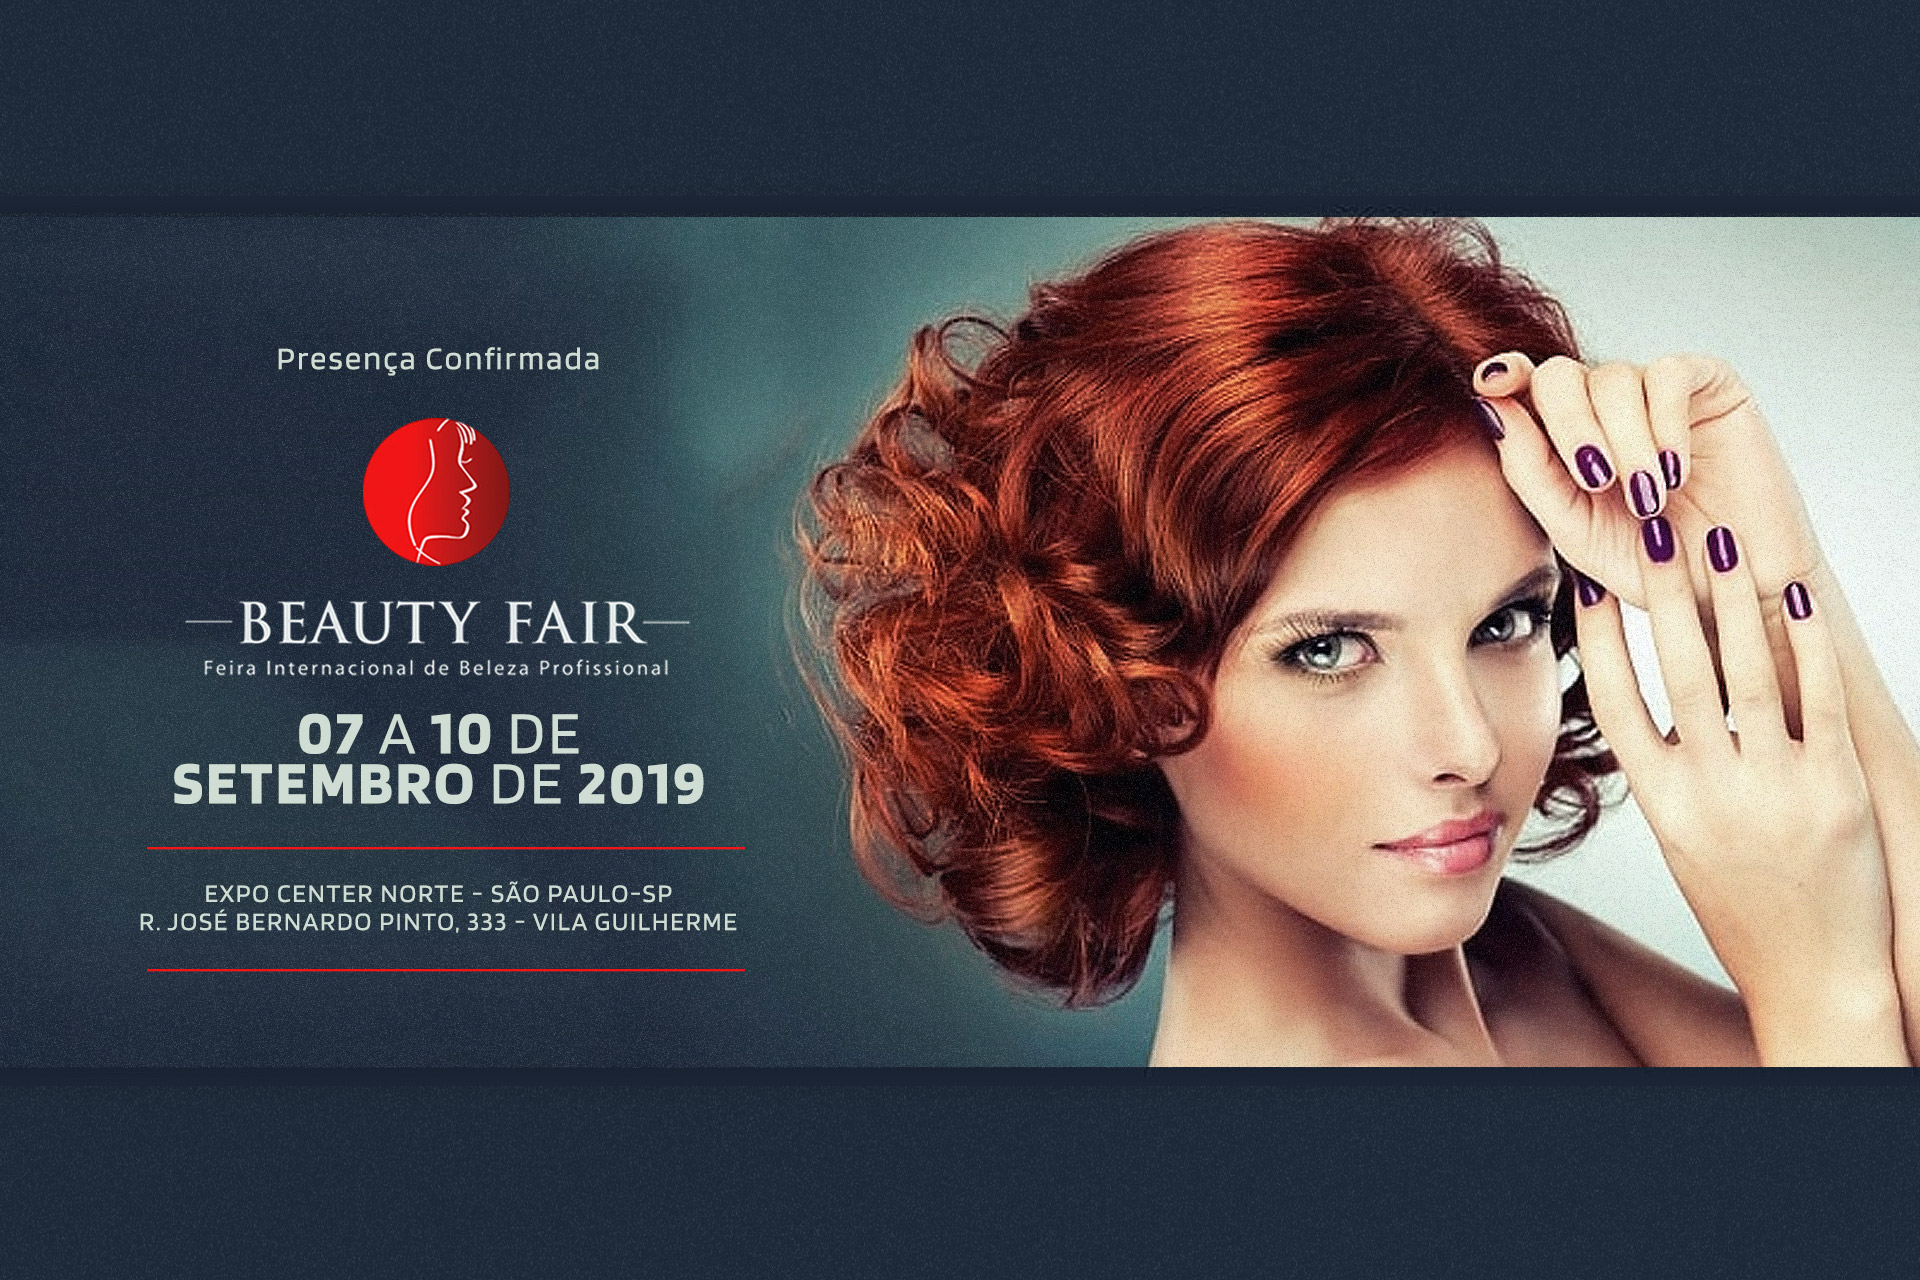 A Lind confirma presença na Beauty Fair 2019